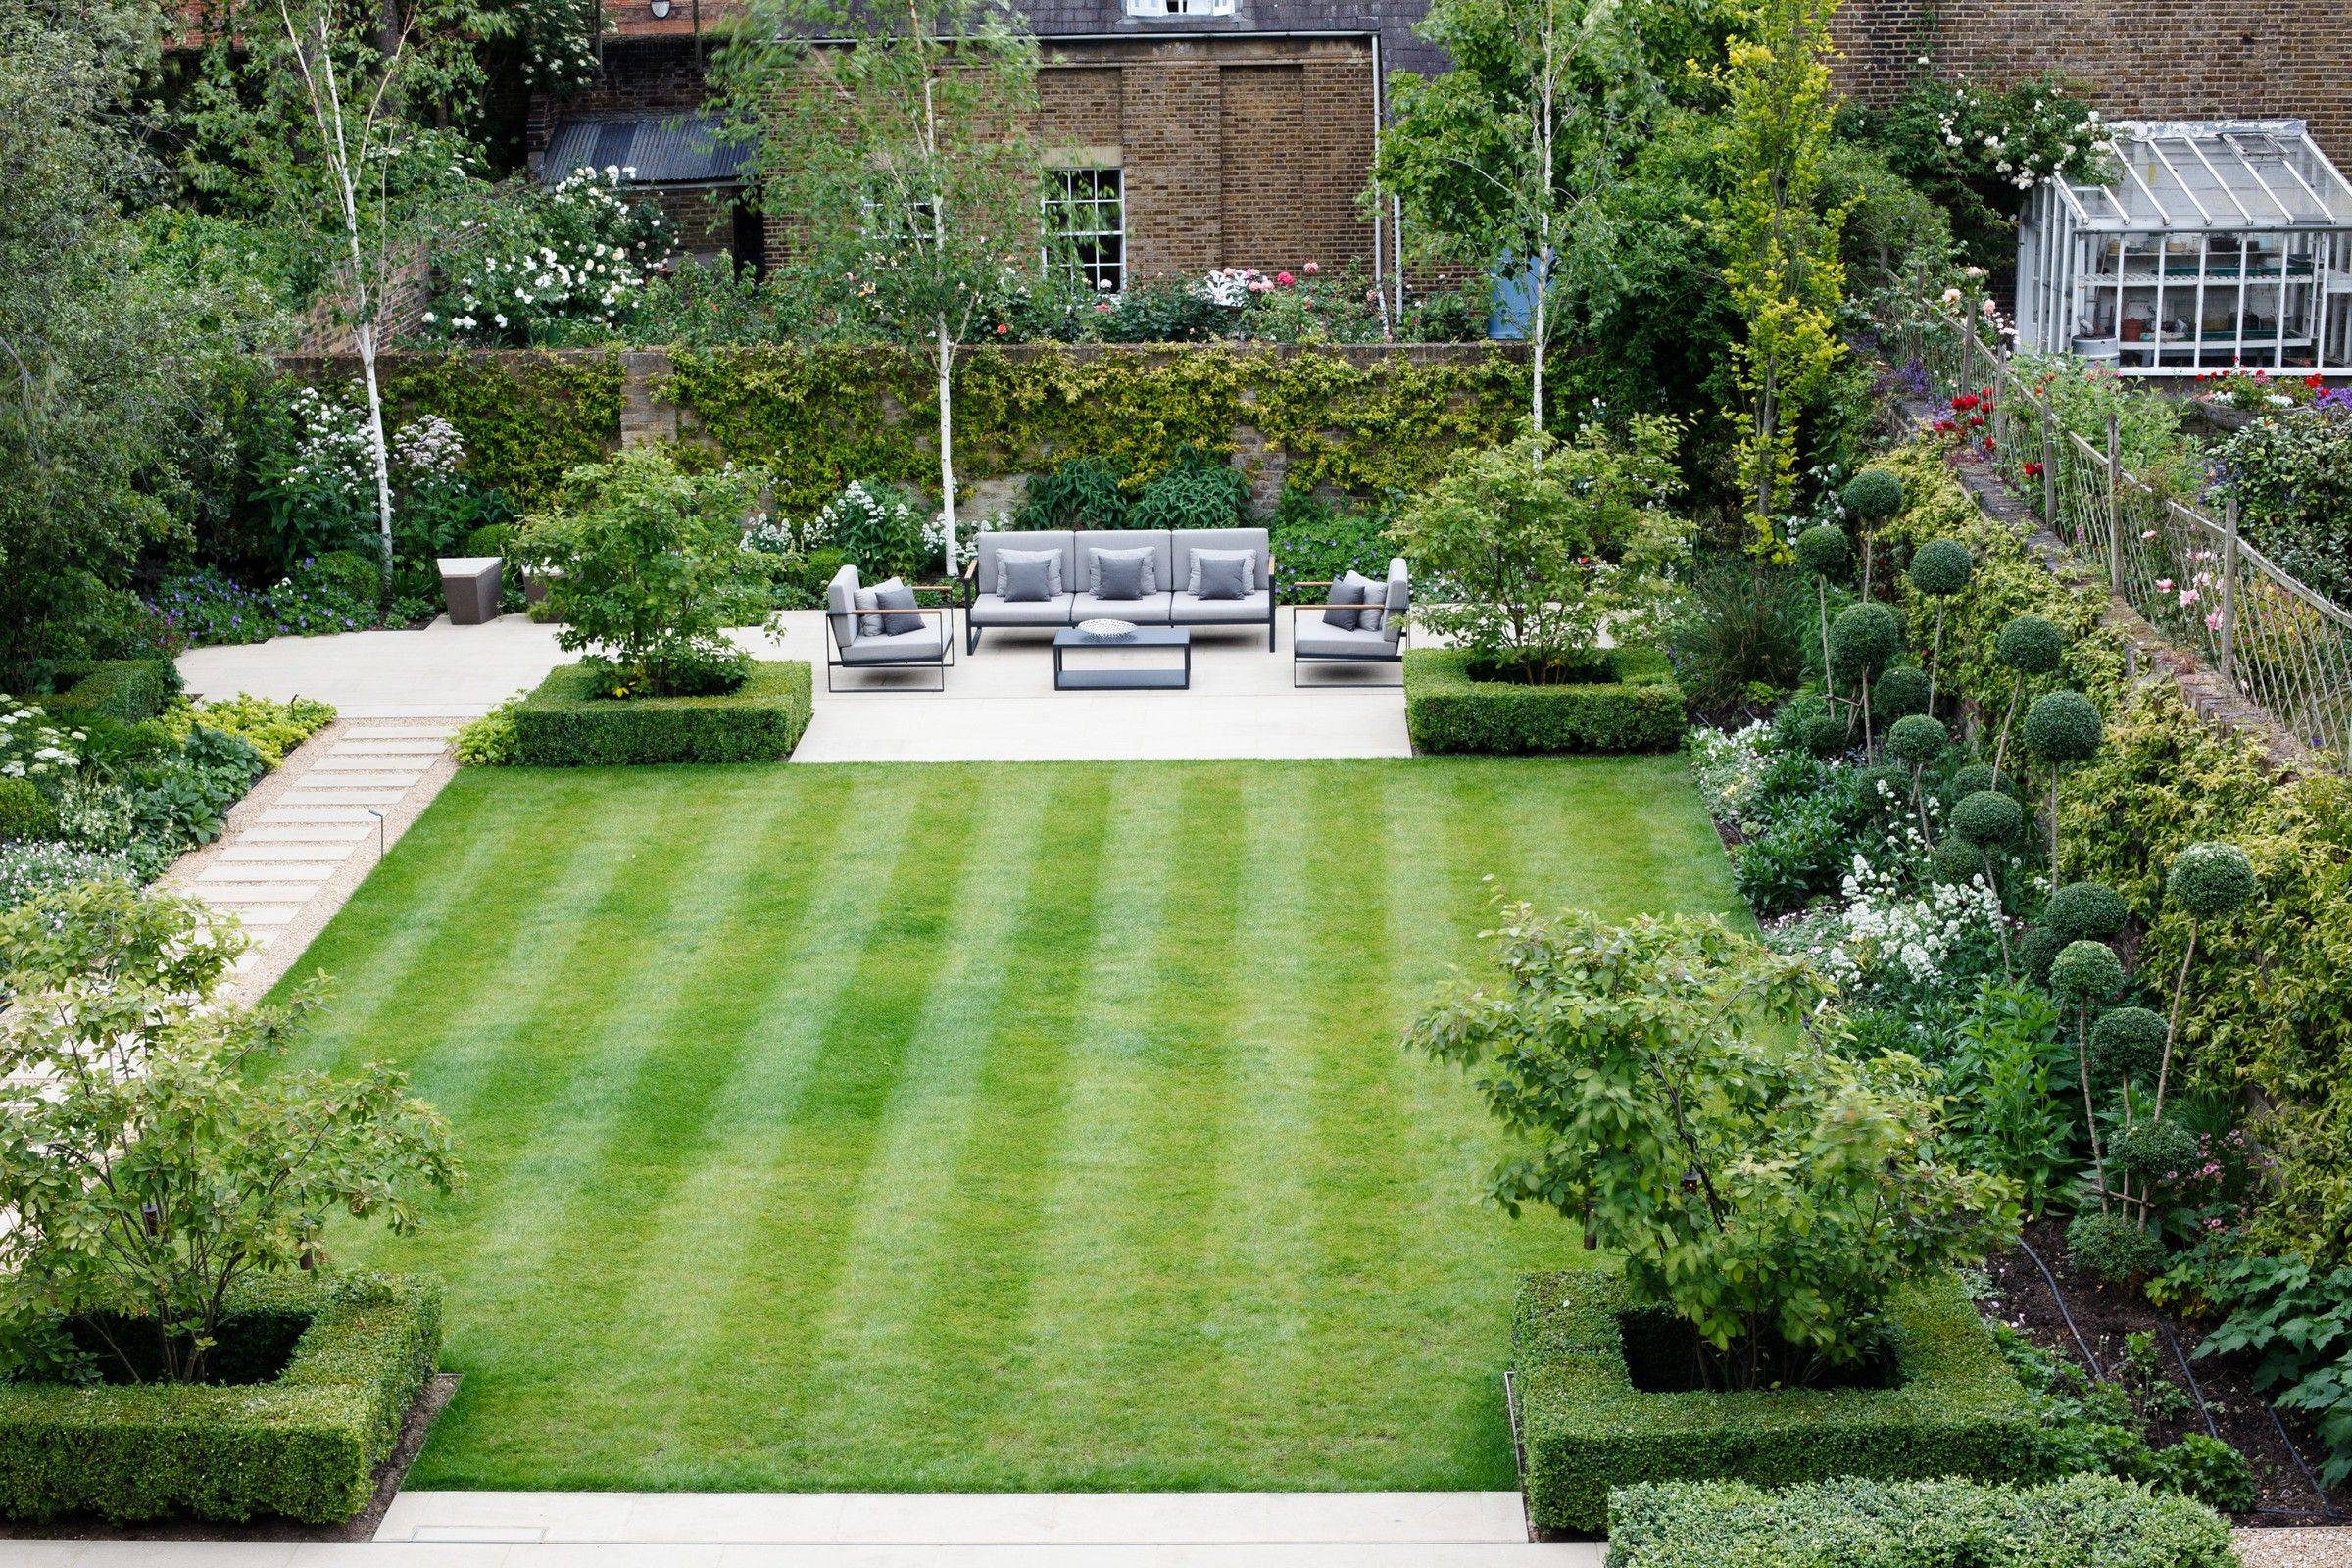 A Formal Garden Garden Layout